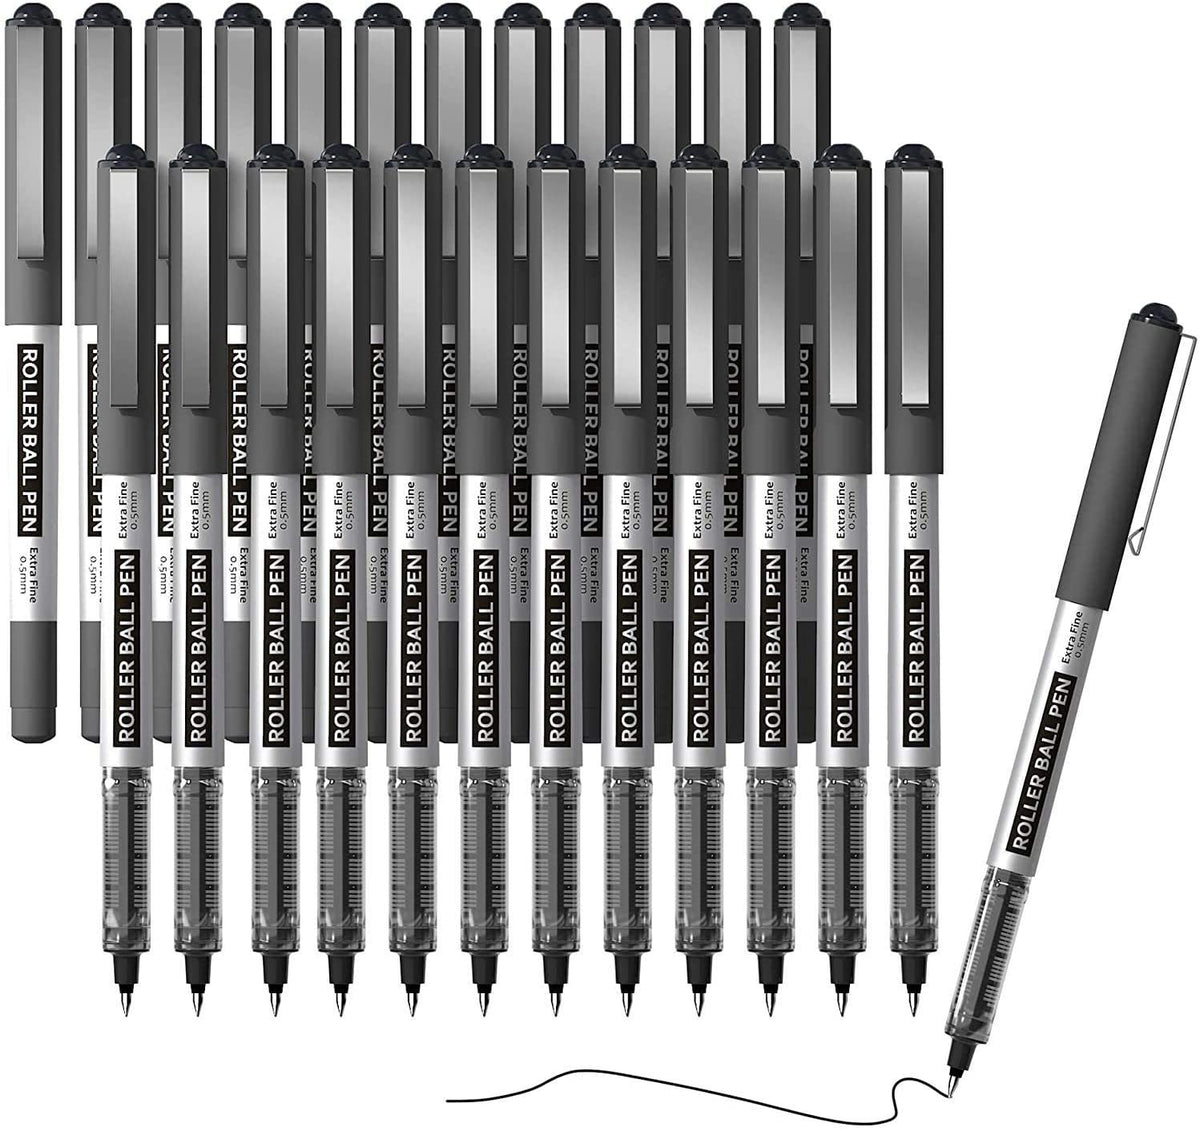 Retractable Black Gel Pens - Set of 100 — Shuttle Art